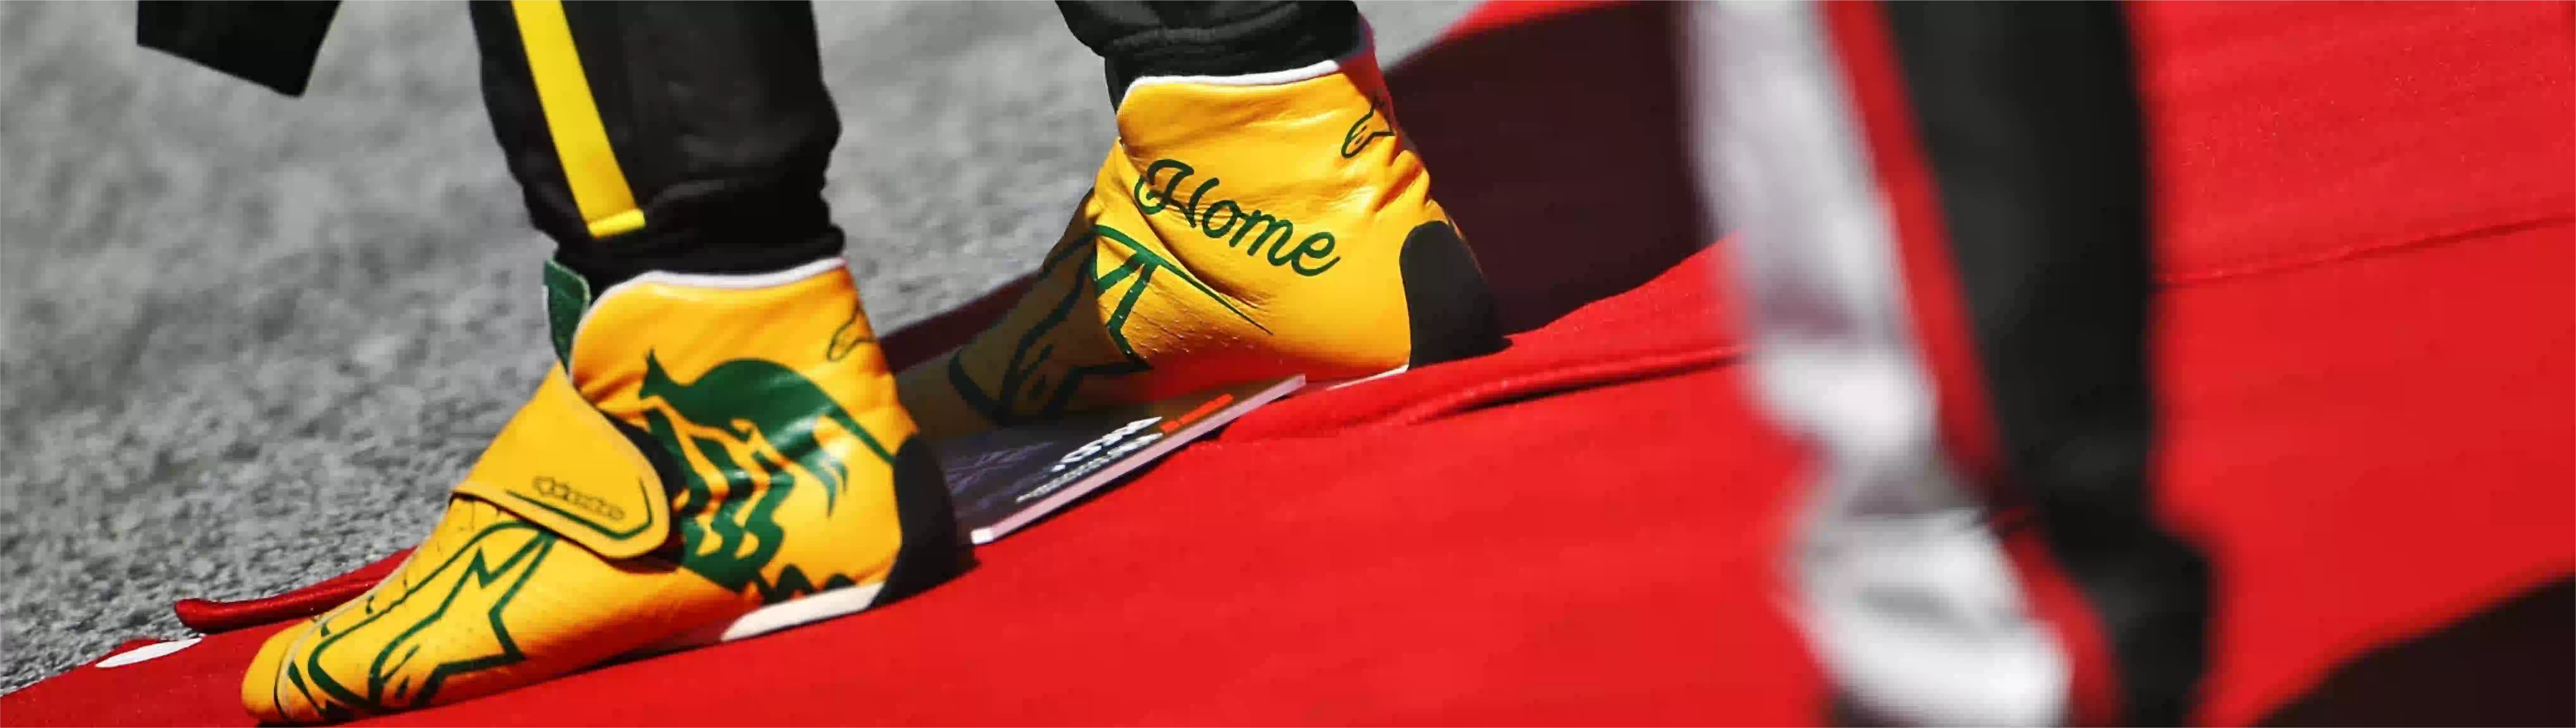 Daniel Ricciardo Race Shoes